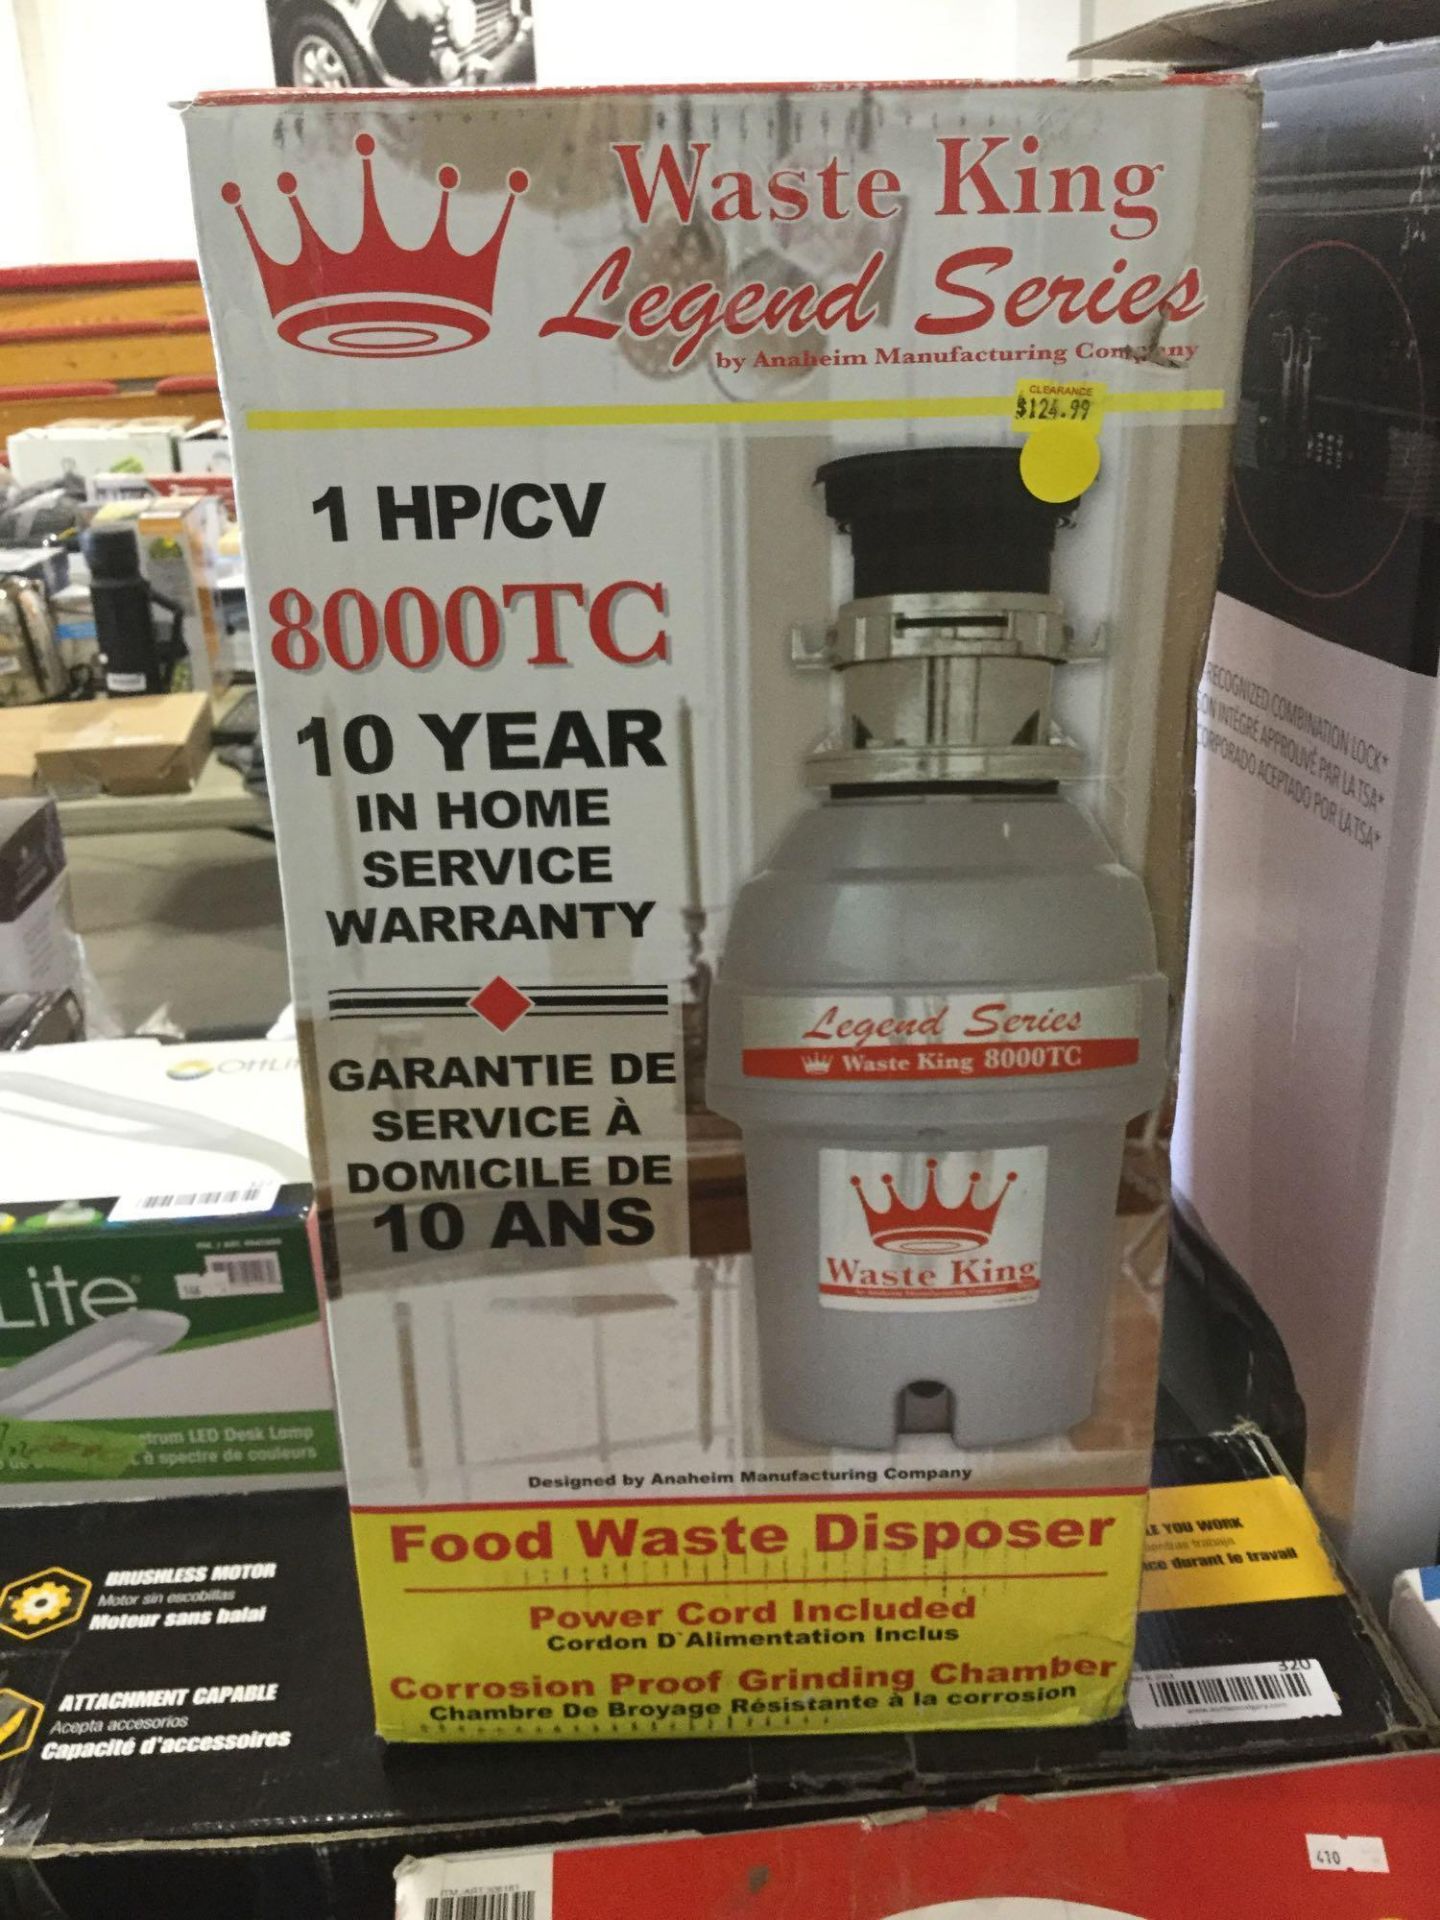 Waste King Legend Series Food Waste Disposer